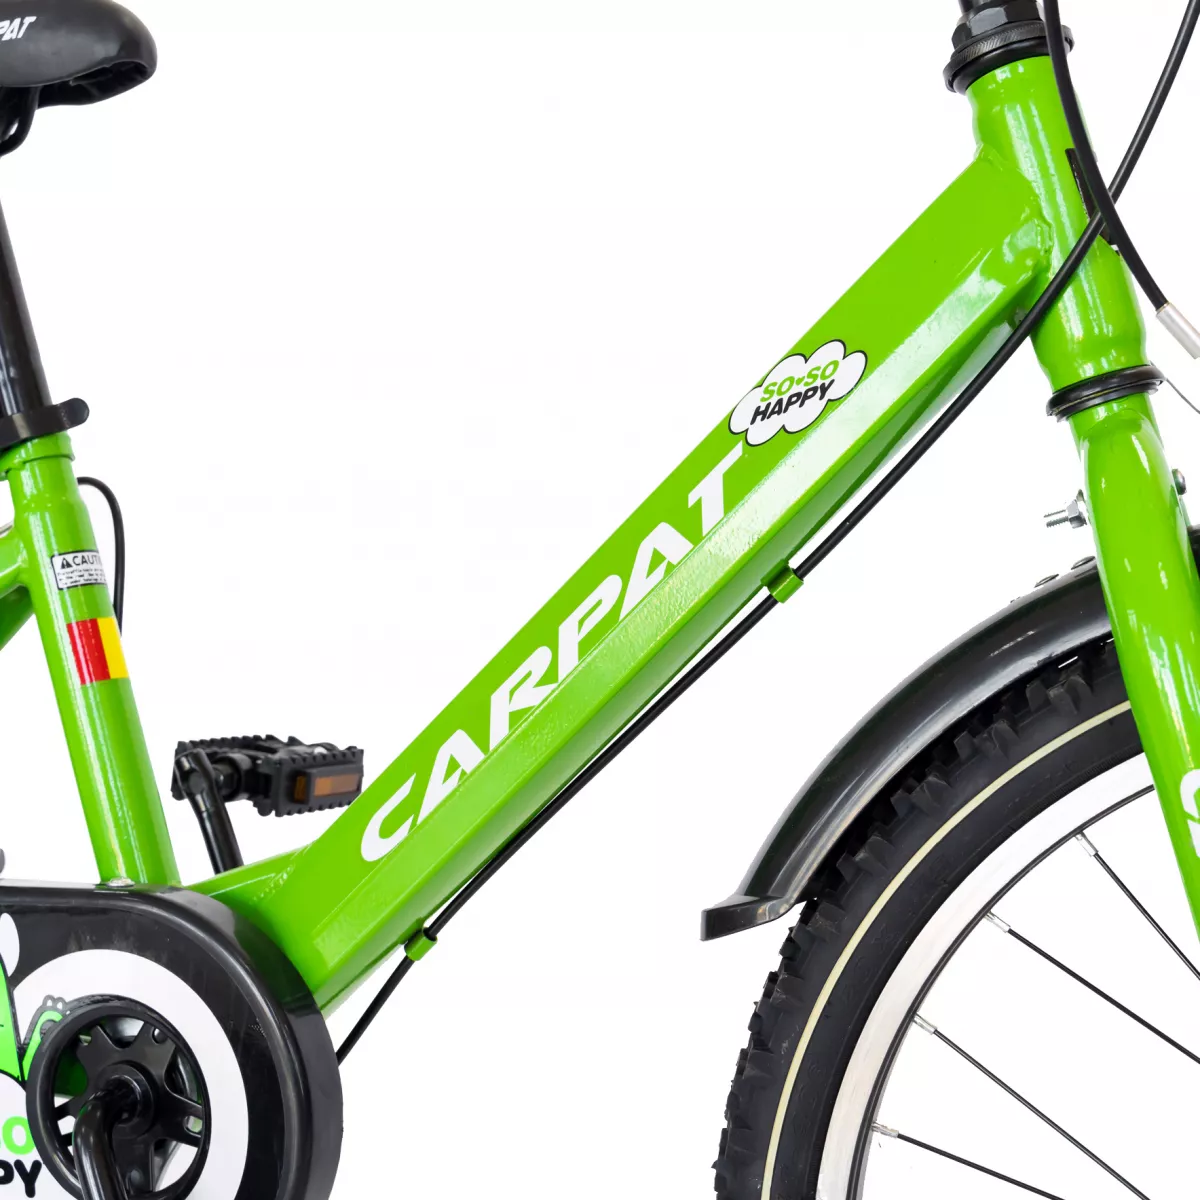 Bicicleta baieti CARPAT C2001C, roata 20", V-Brake, 7-10 ani, verde/negru 